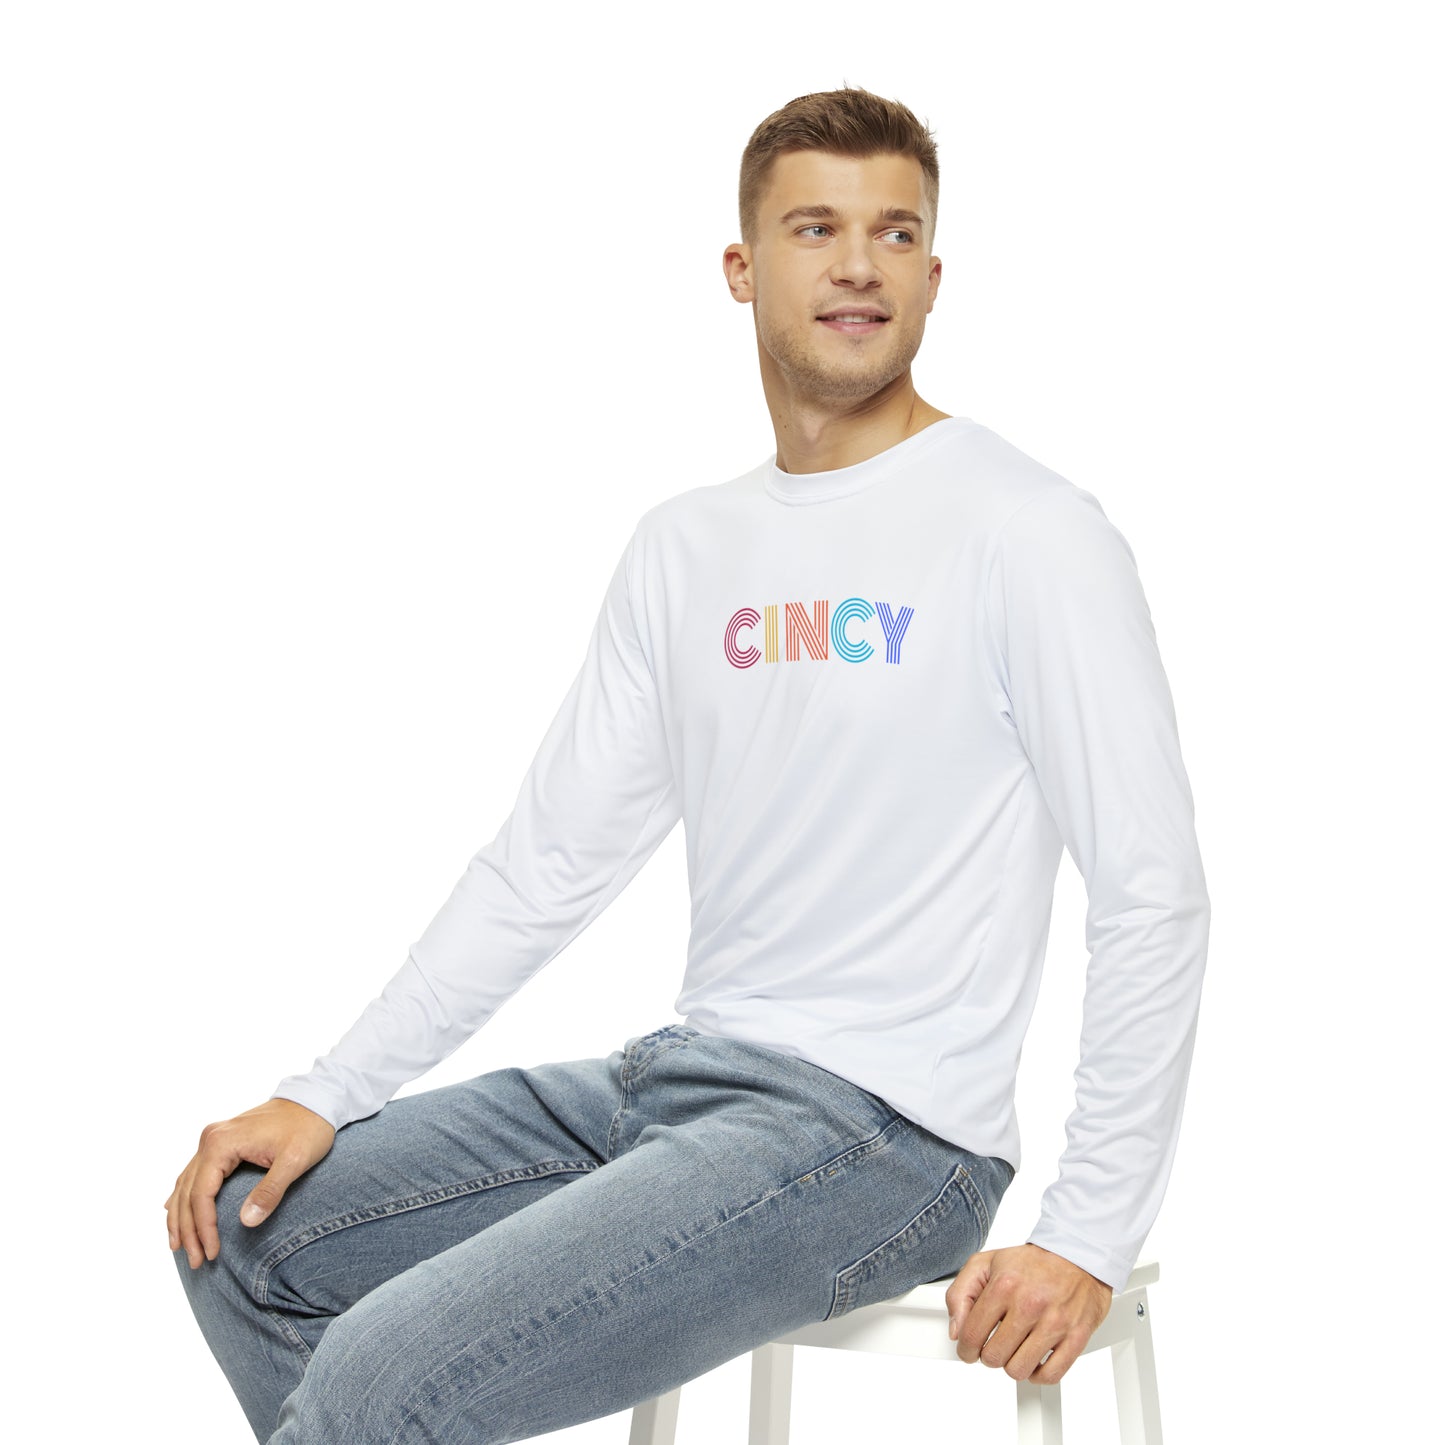 CINCY Men's Long Sleeve Shirt